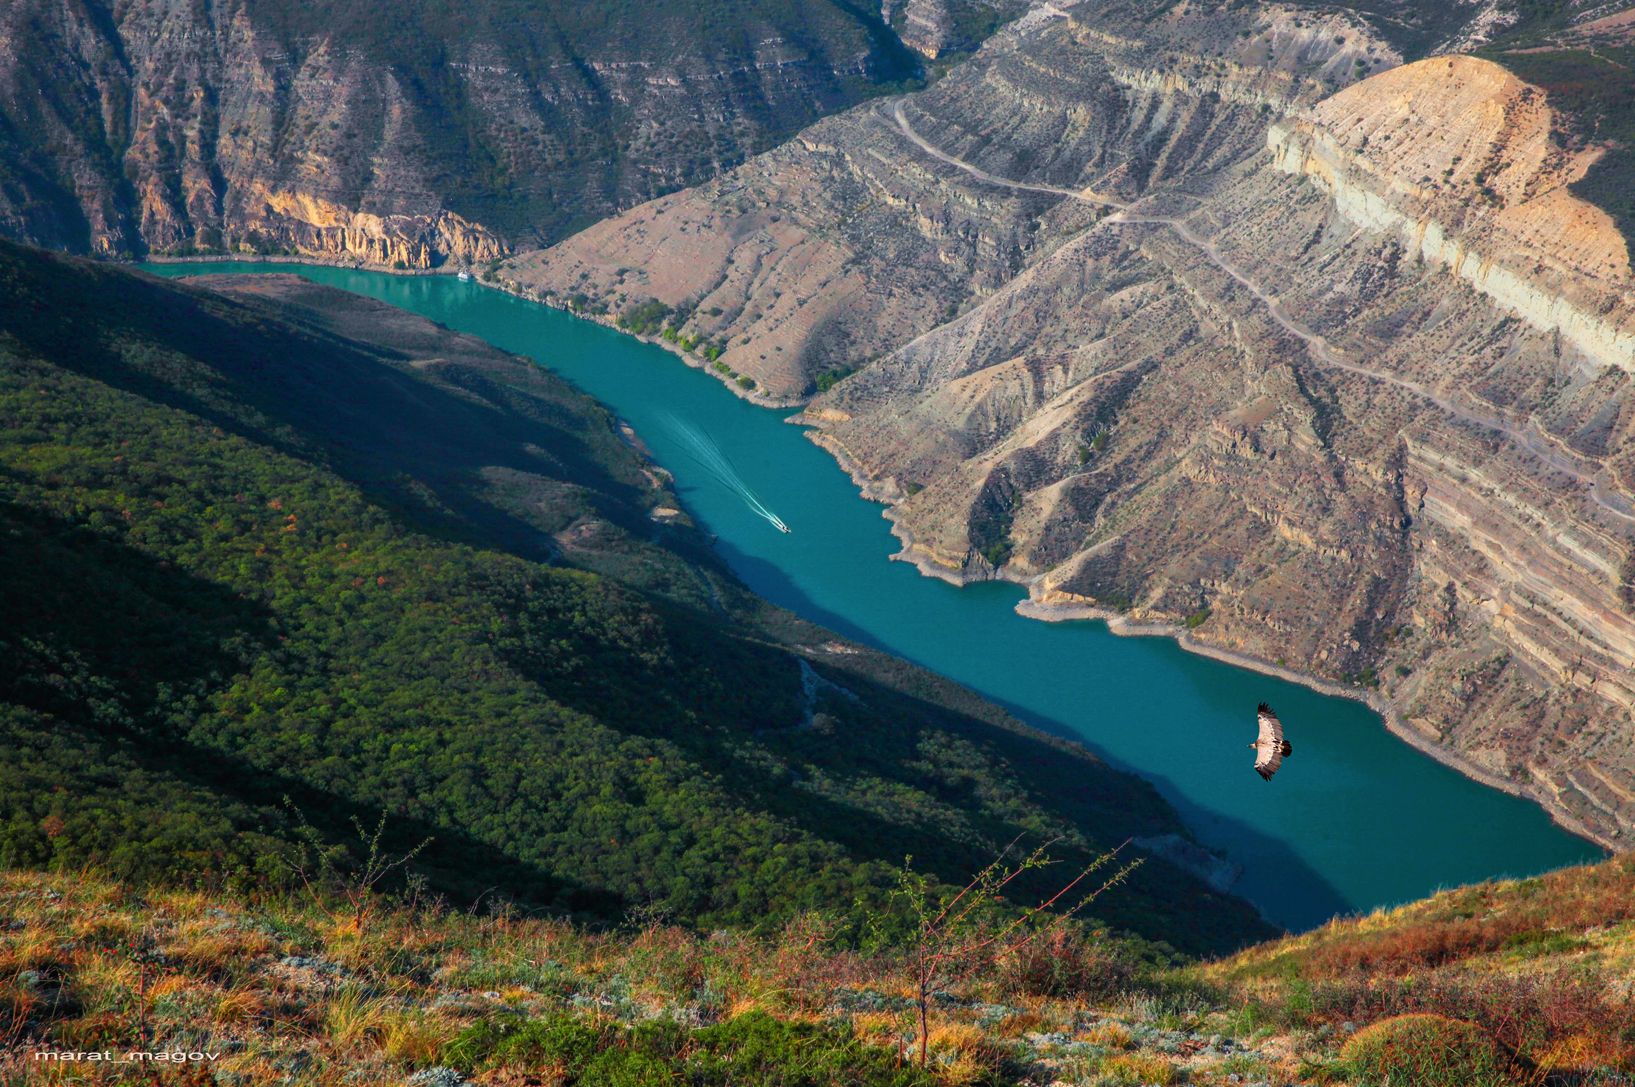 сулак,каньон,река,вода,горы,дагестан., Marat Magov